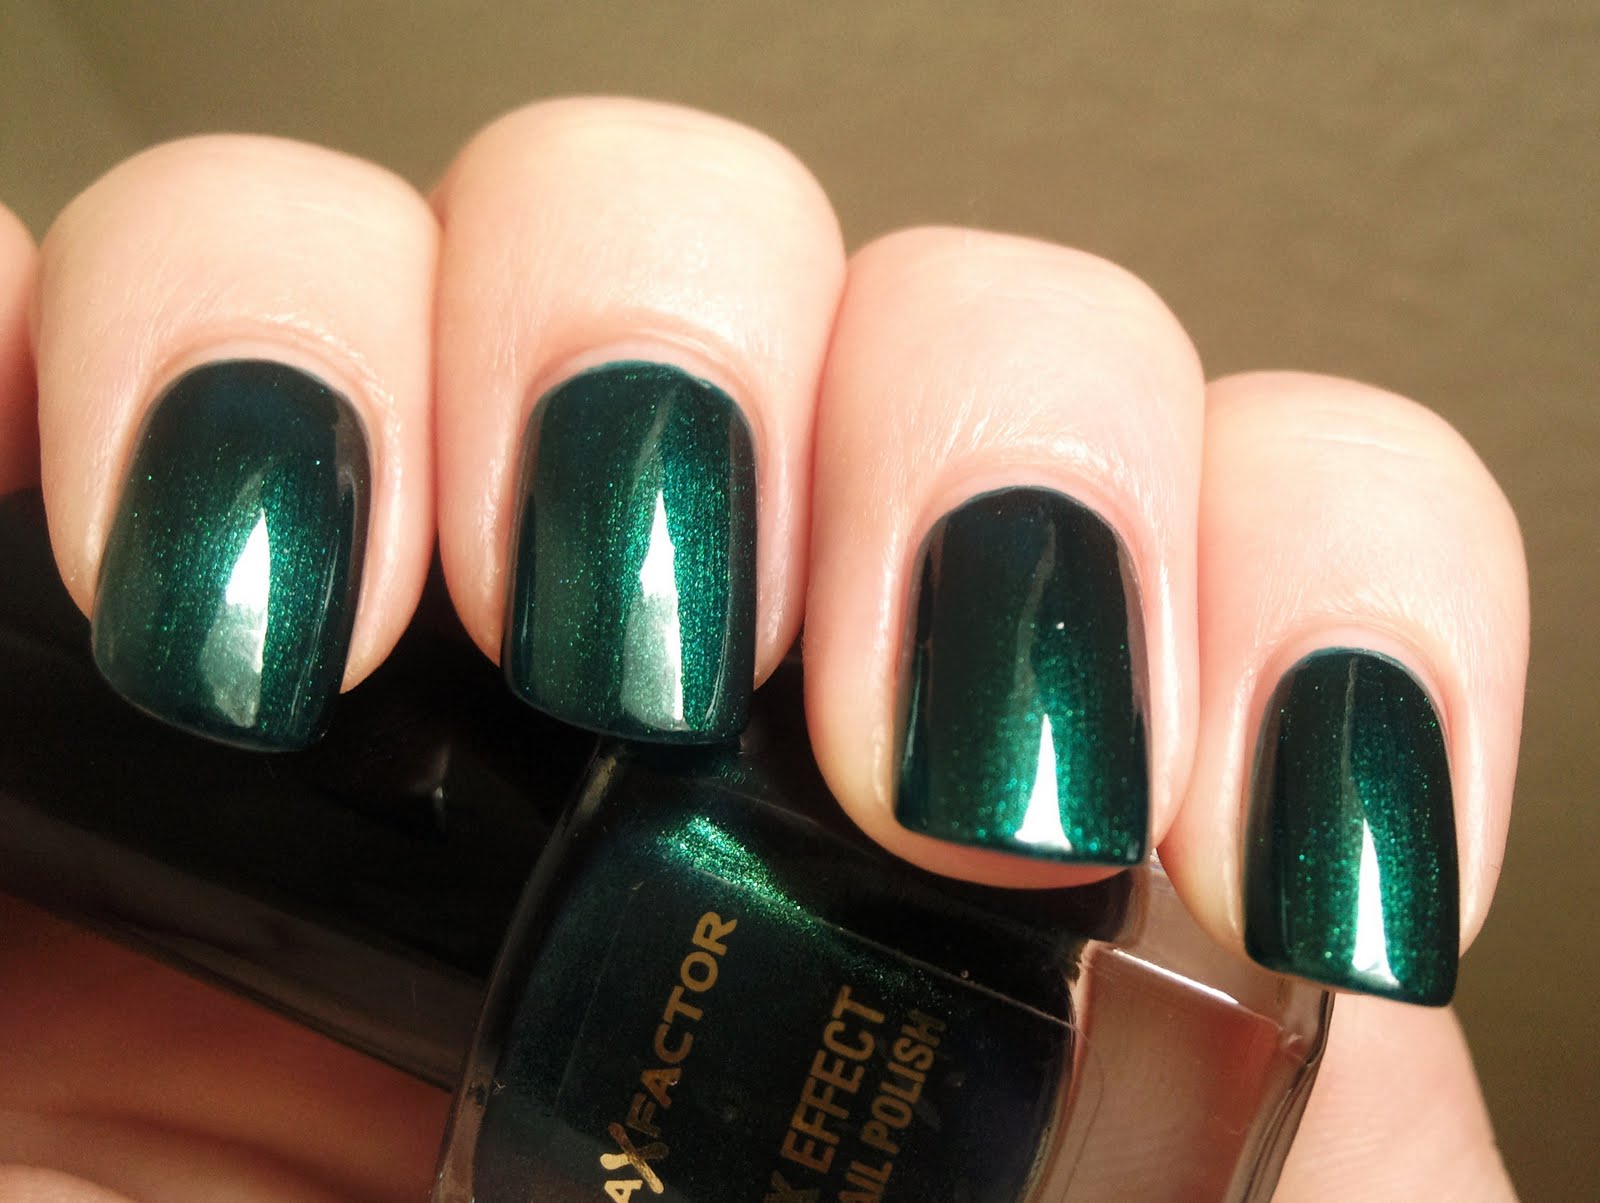 1. "Emerald Green Gel Nail Polish" - wide 2